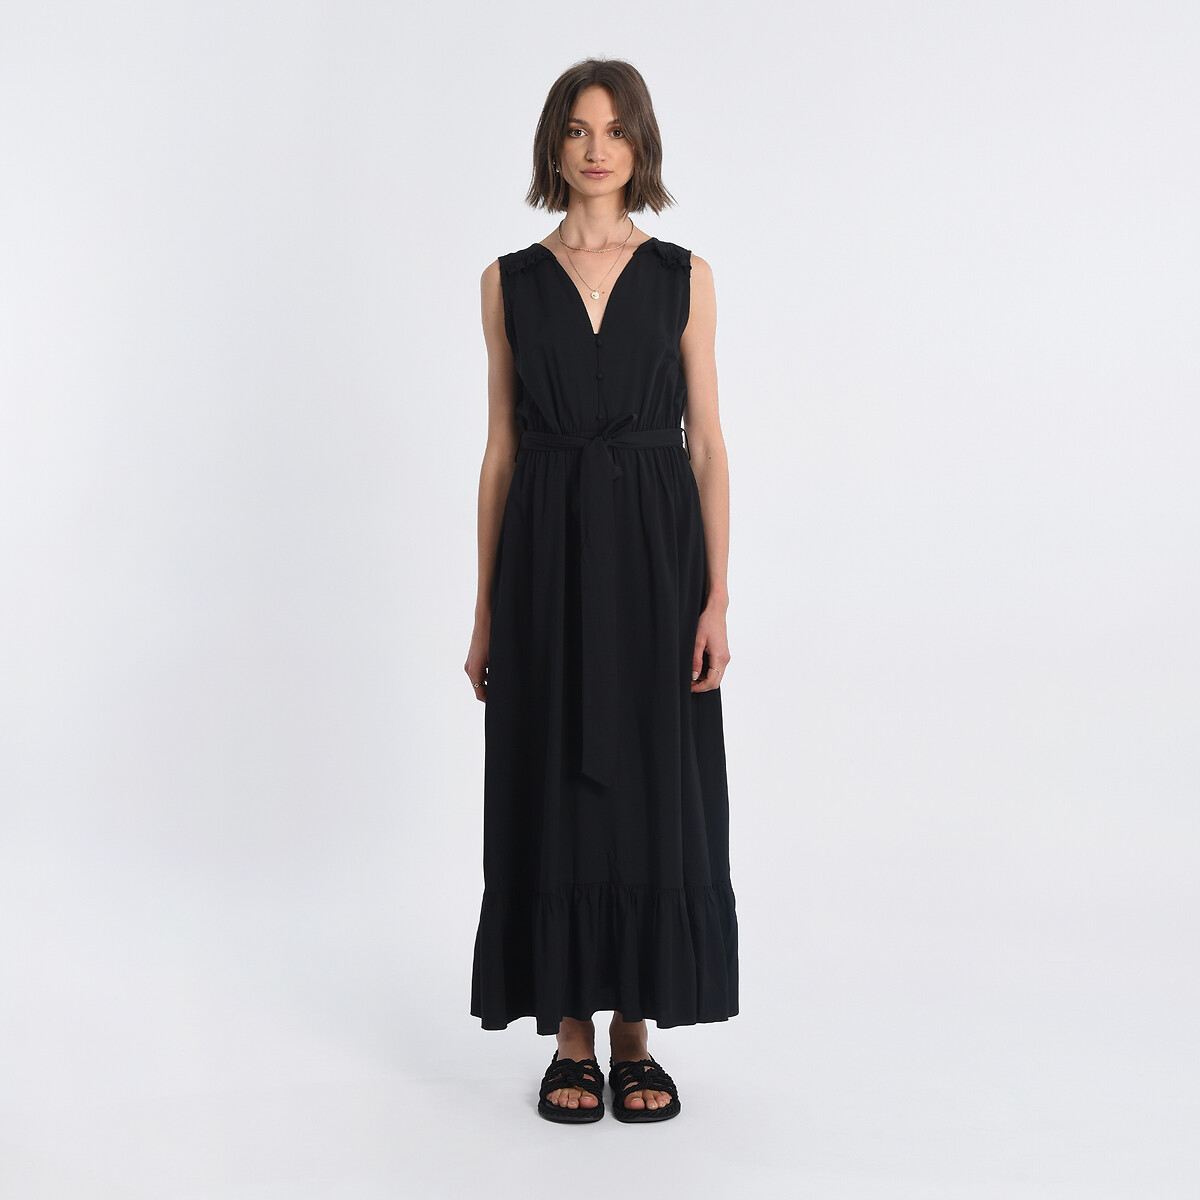 Sleeveless maxi dress with tie-waist, black, Molly Bracken | La Redoute